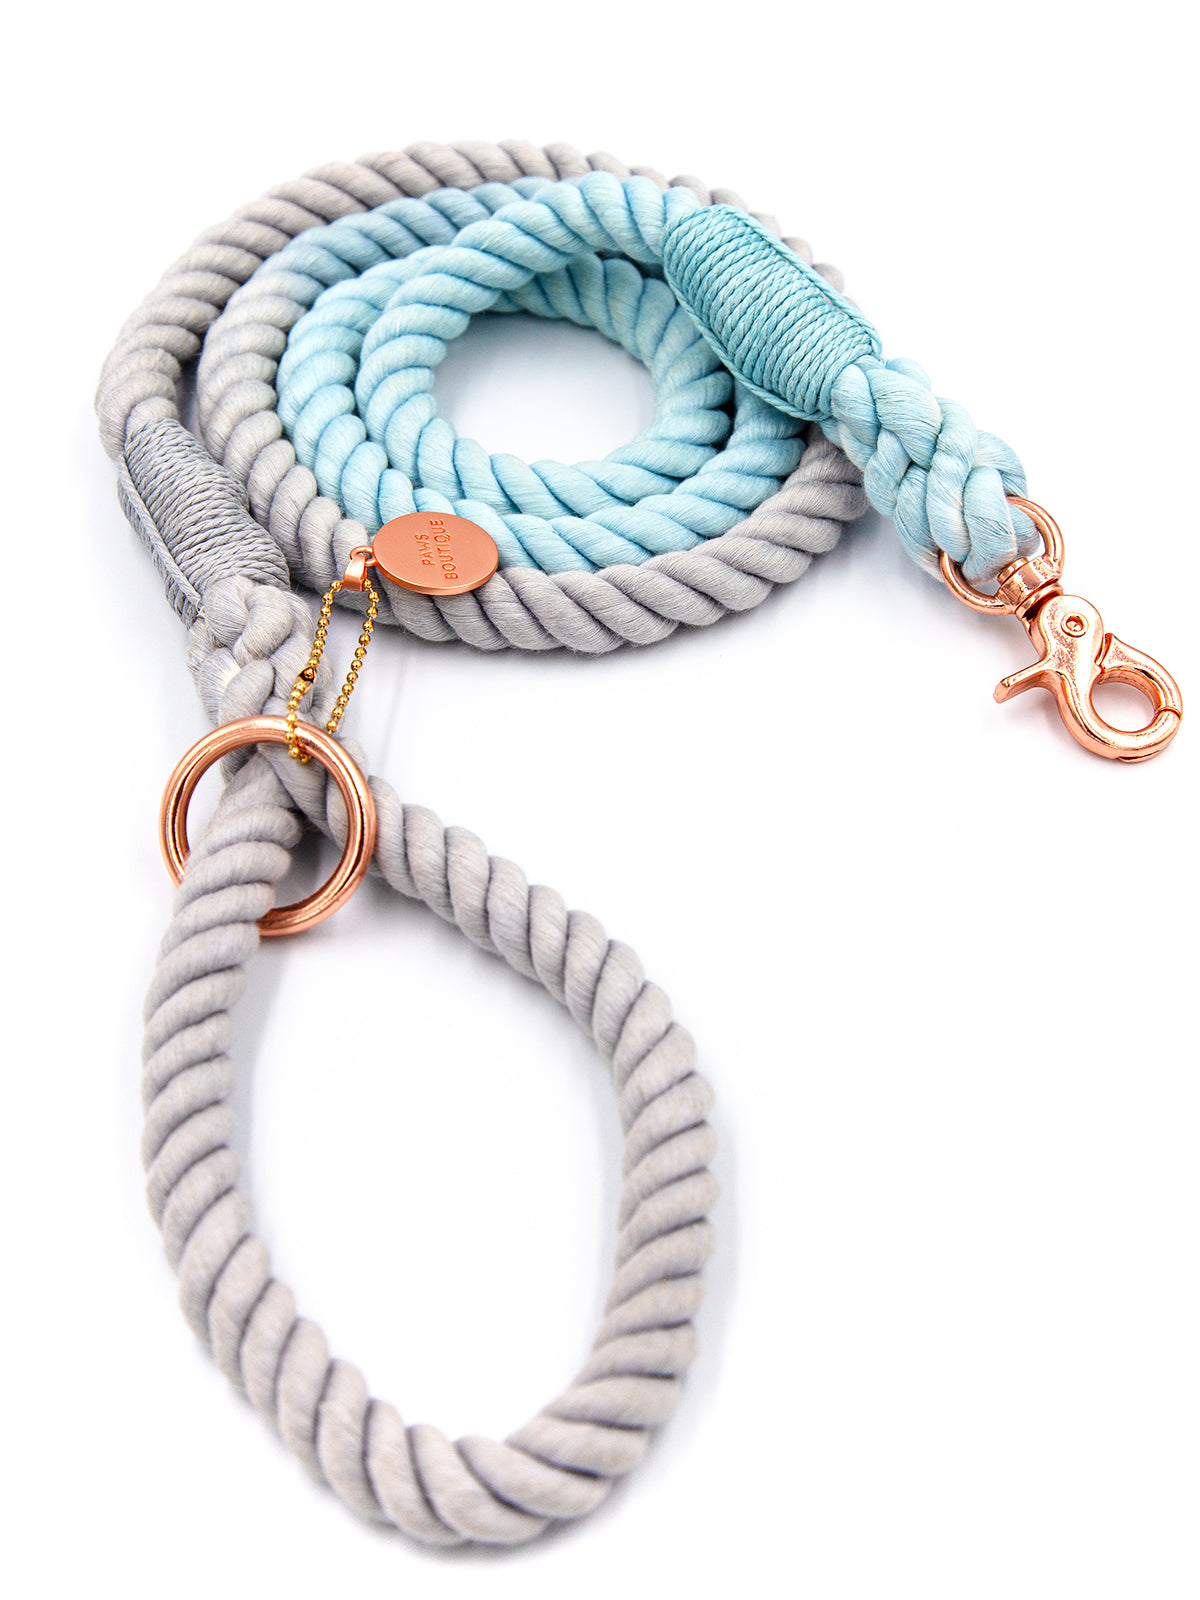 Sailor design dog leash